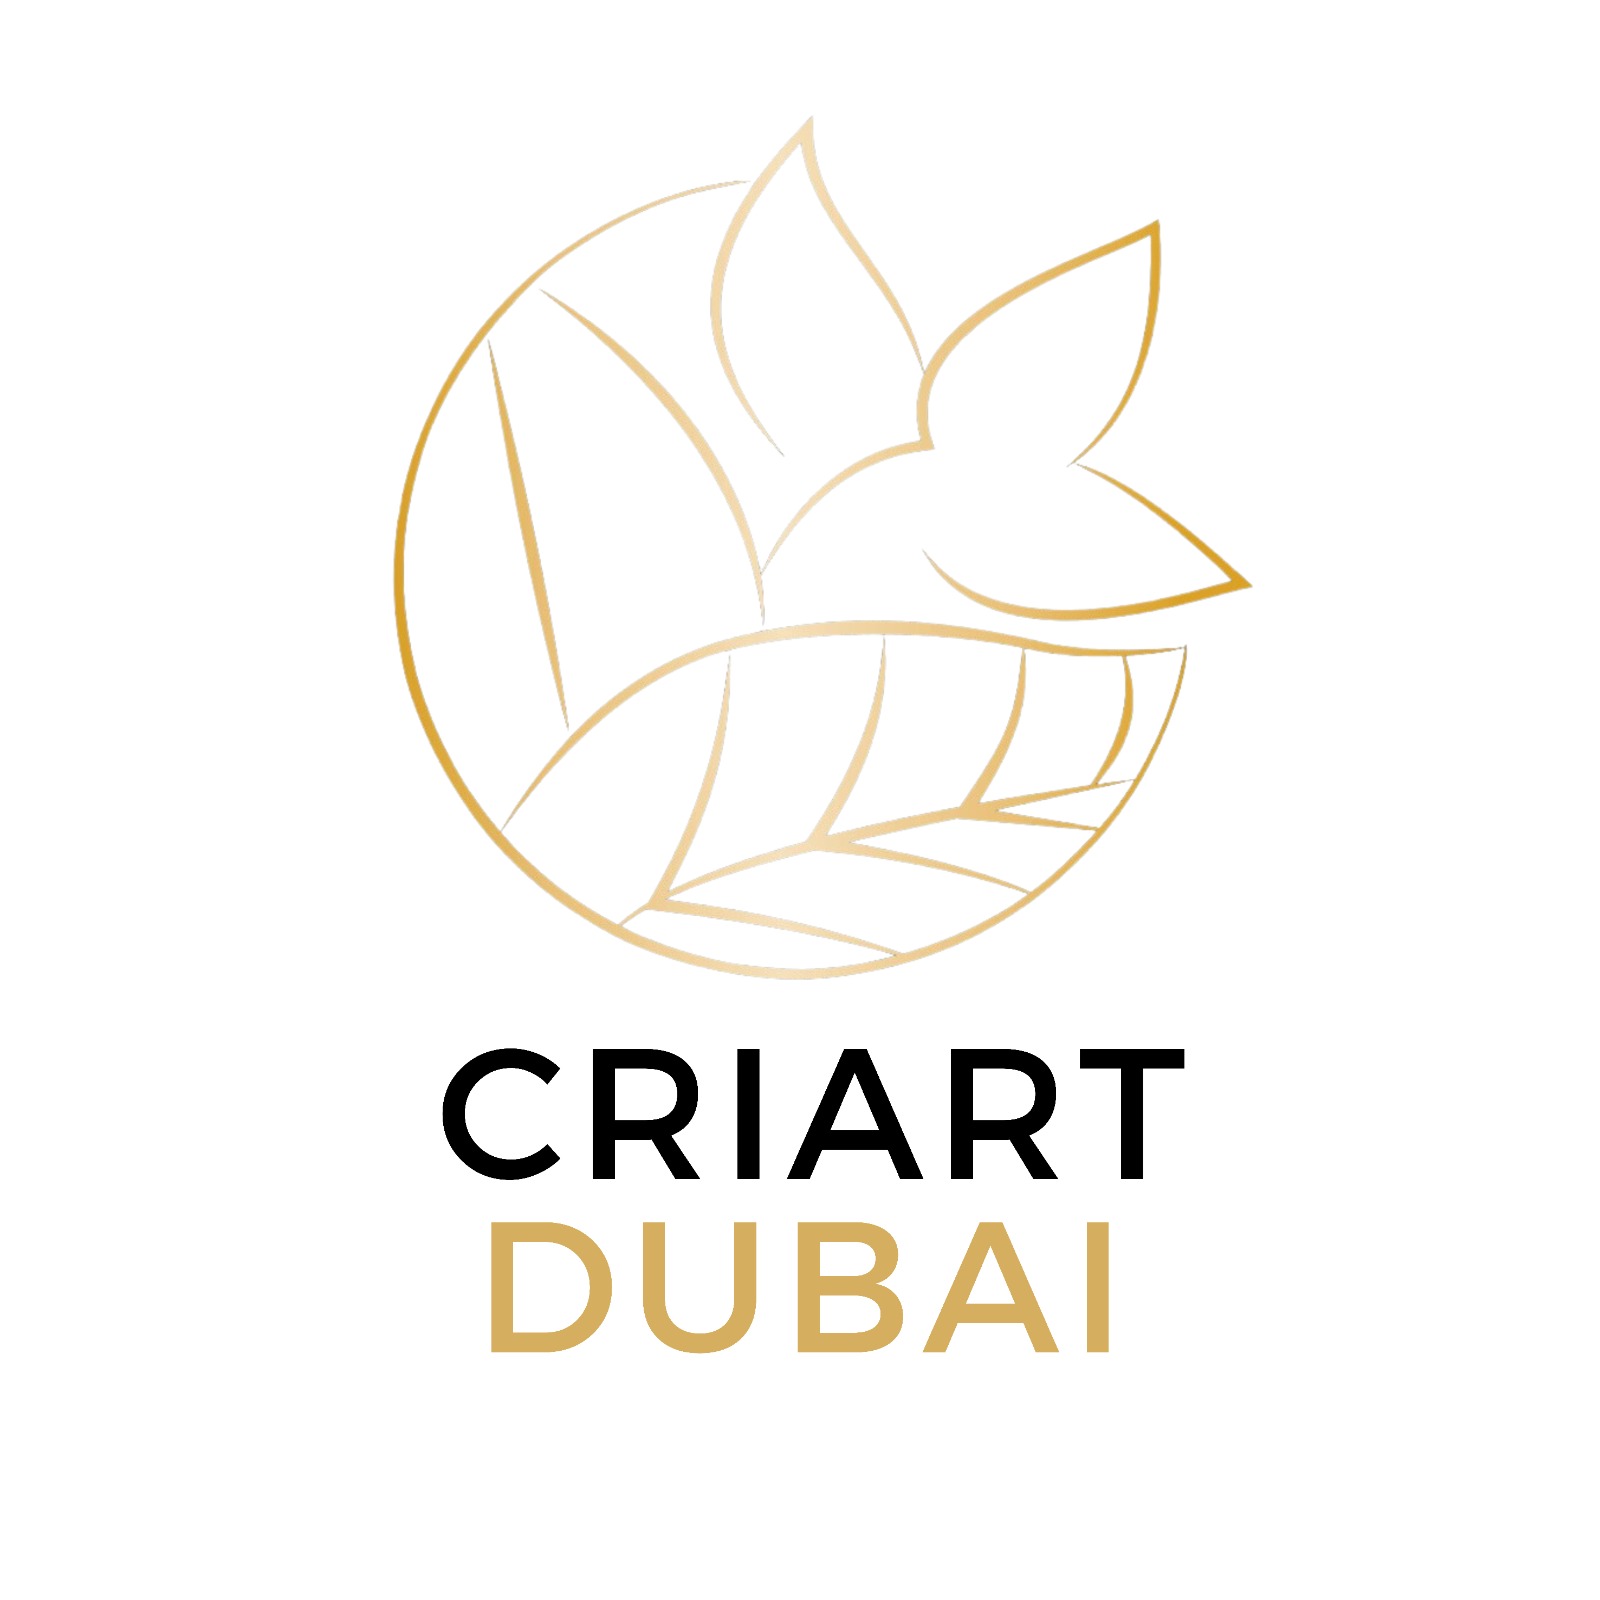 CRIART DUBAI